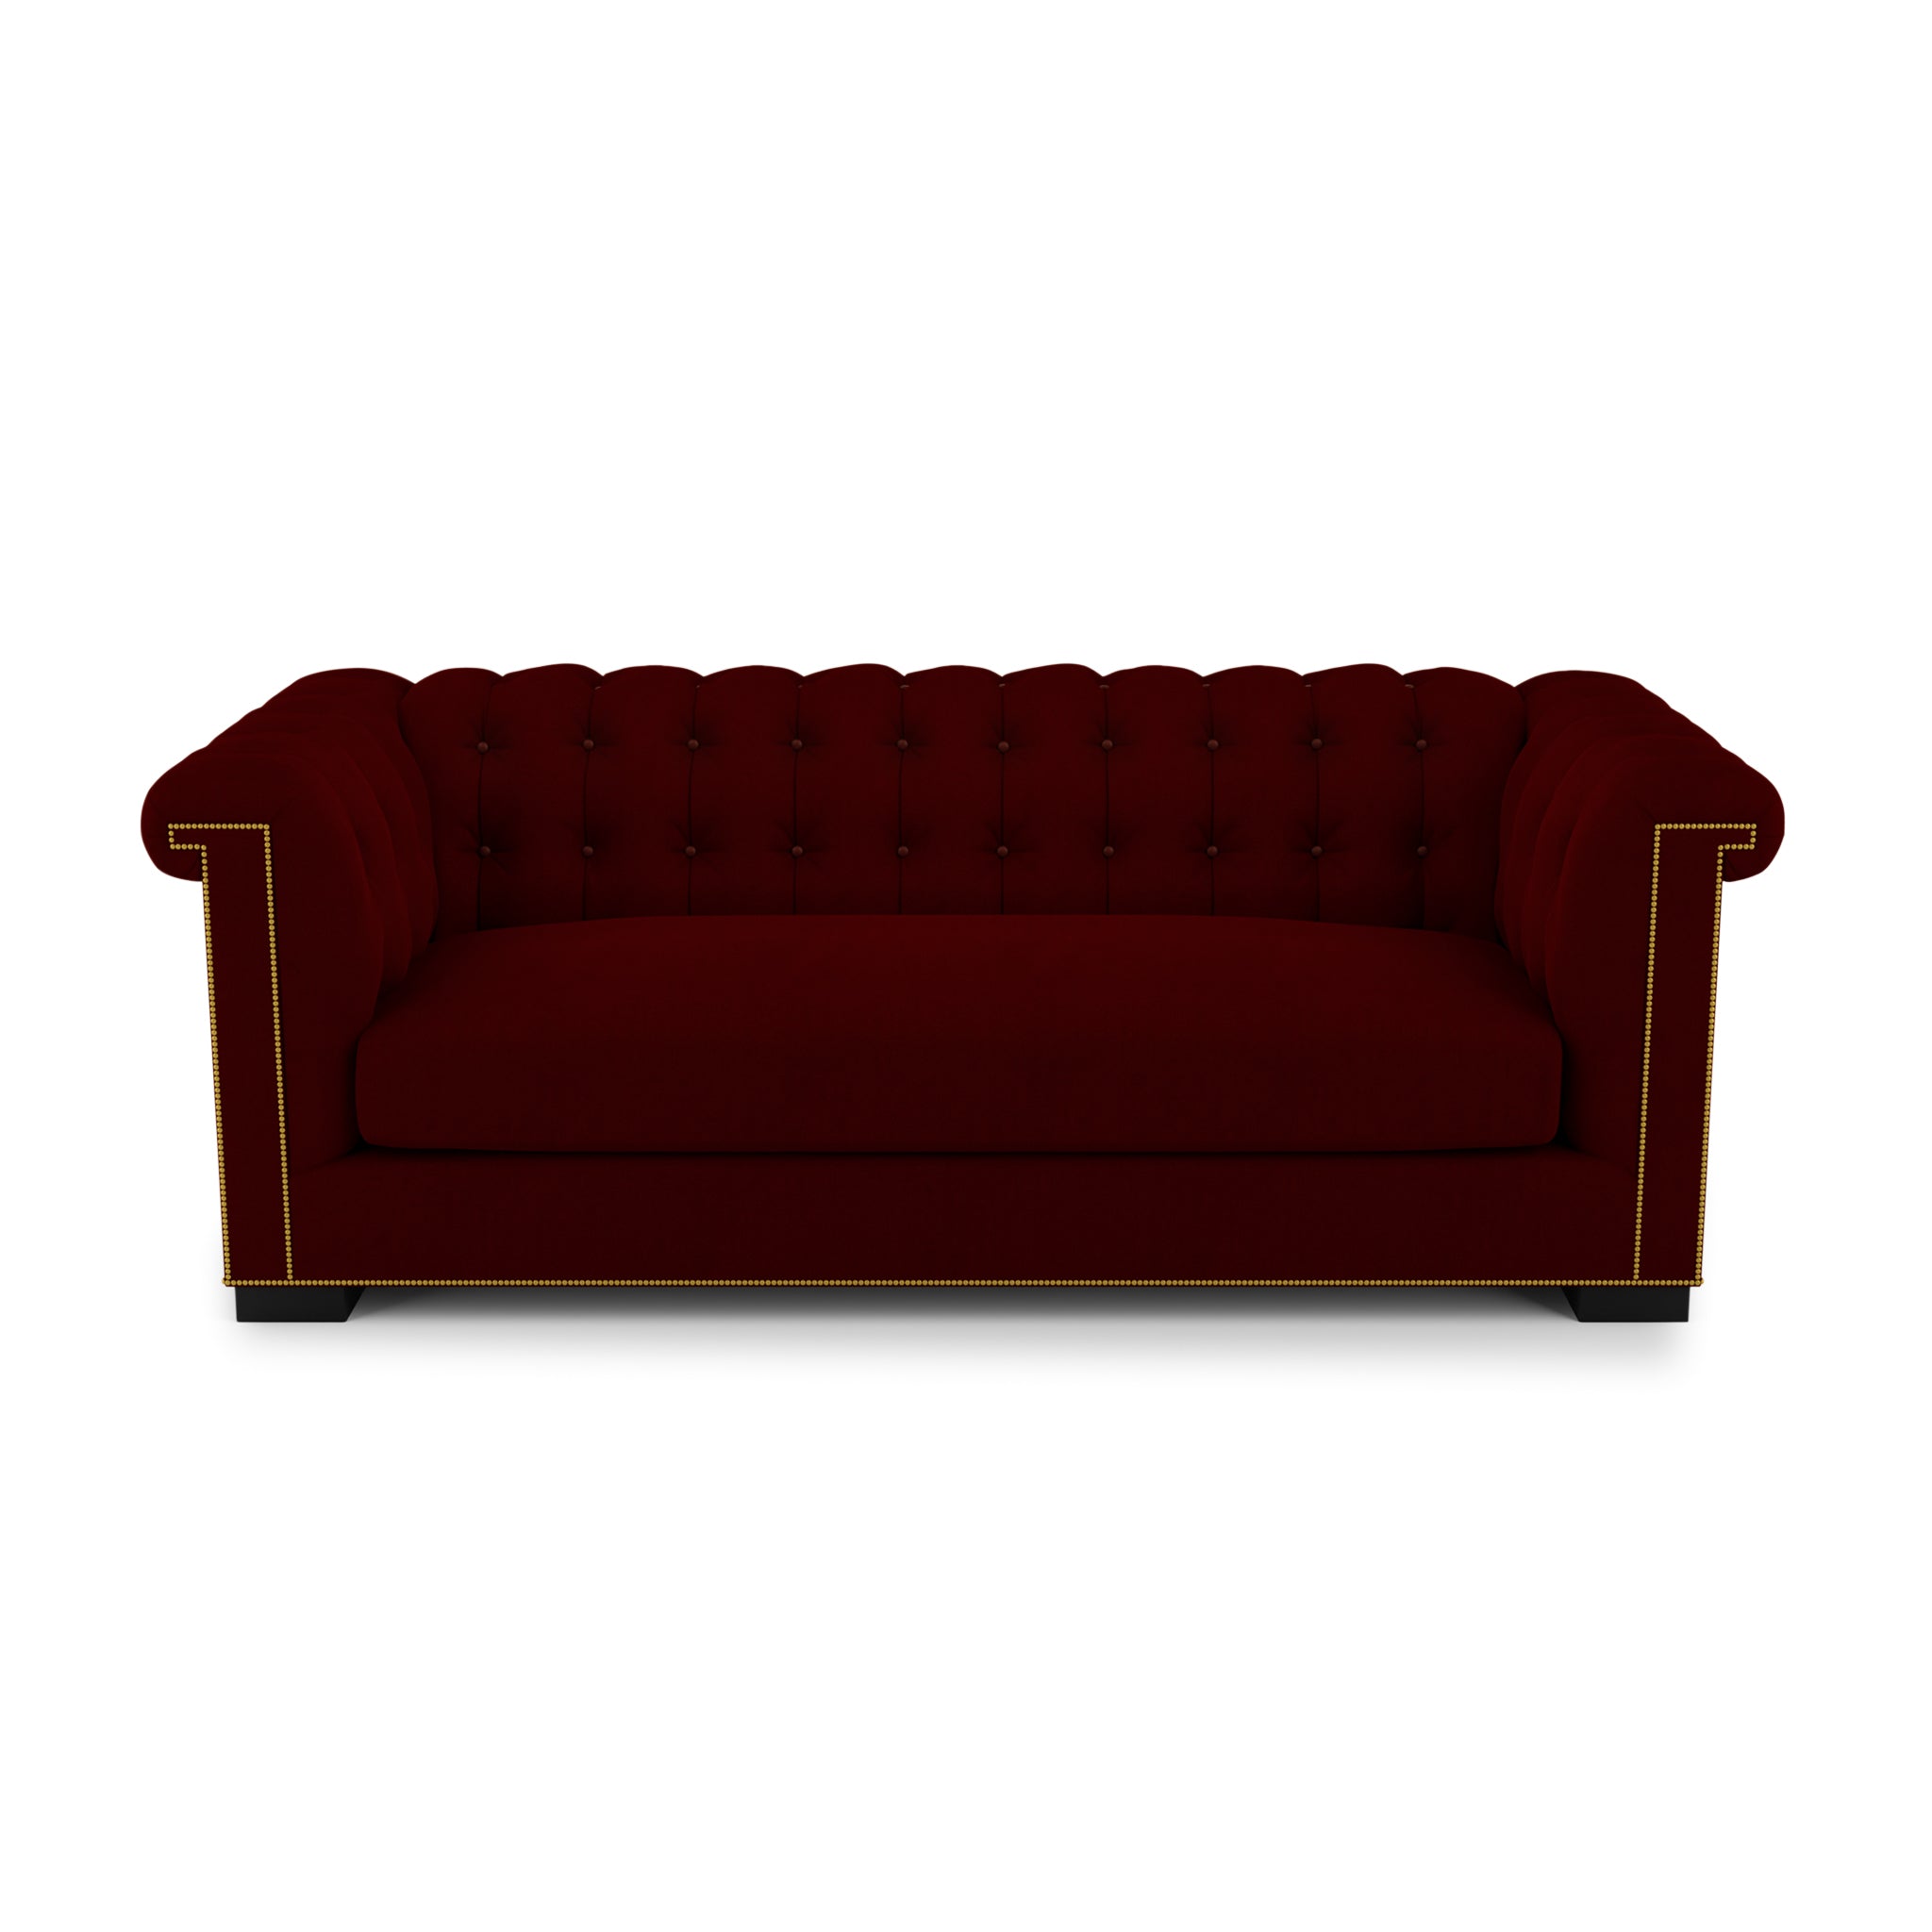 The Hardwick Hall Collection - Sofa